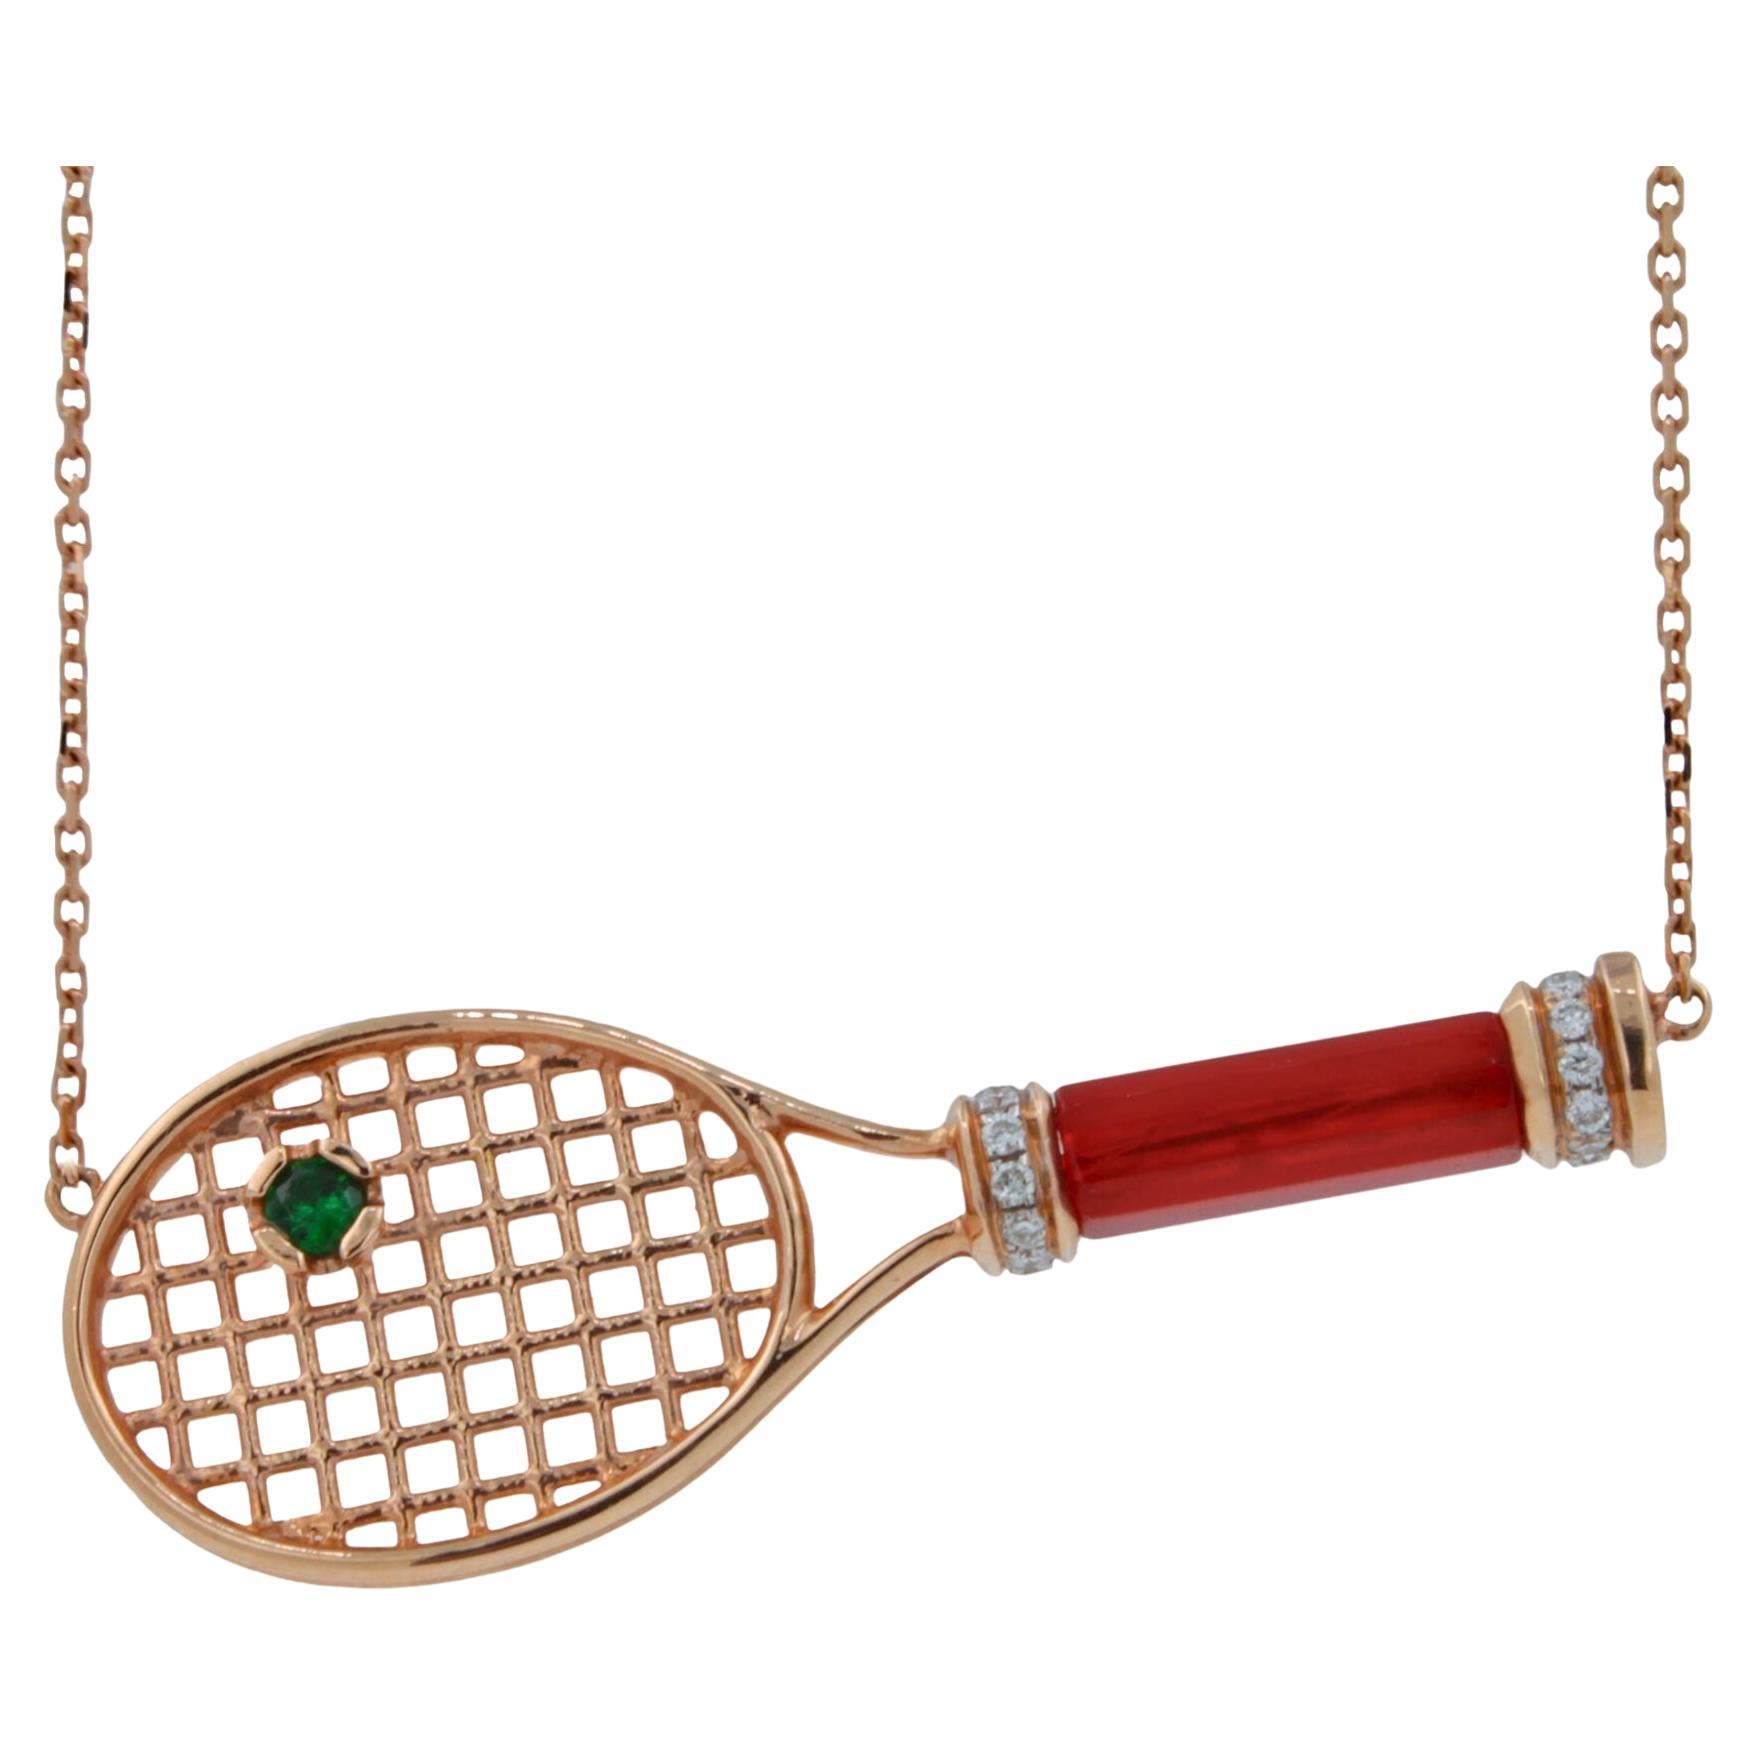 Tennis-Halskette aus Roségold mit rotem Karneolgriff und grünem Smaragdkugel-Anhänger